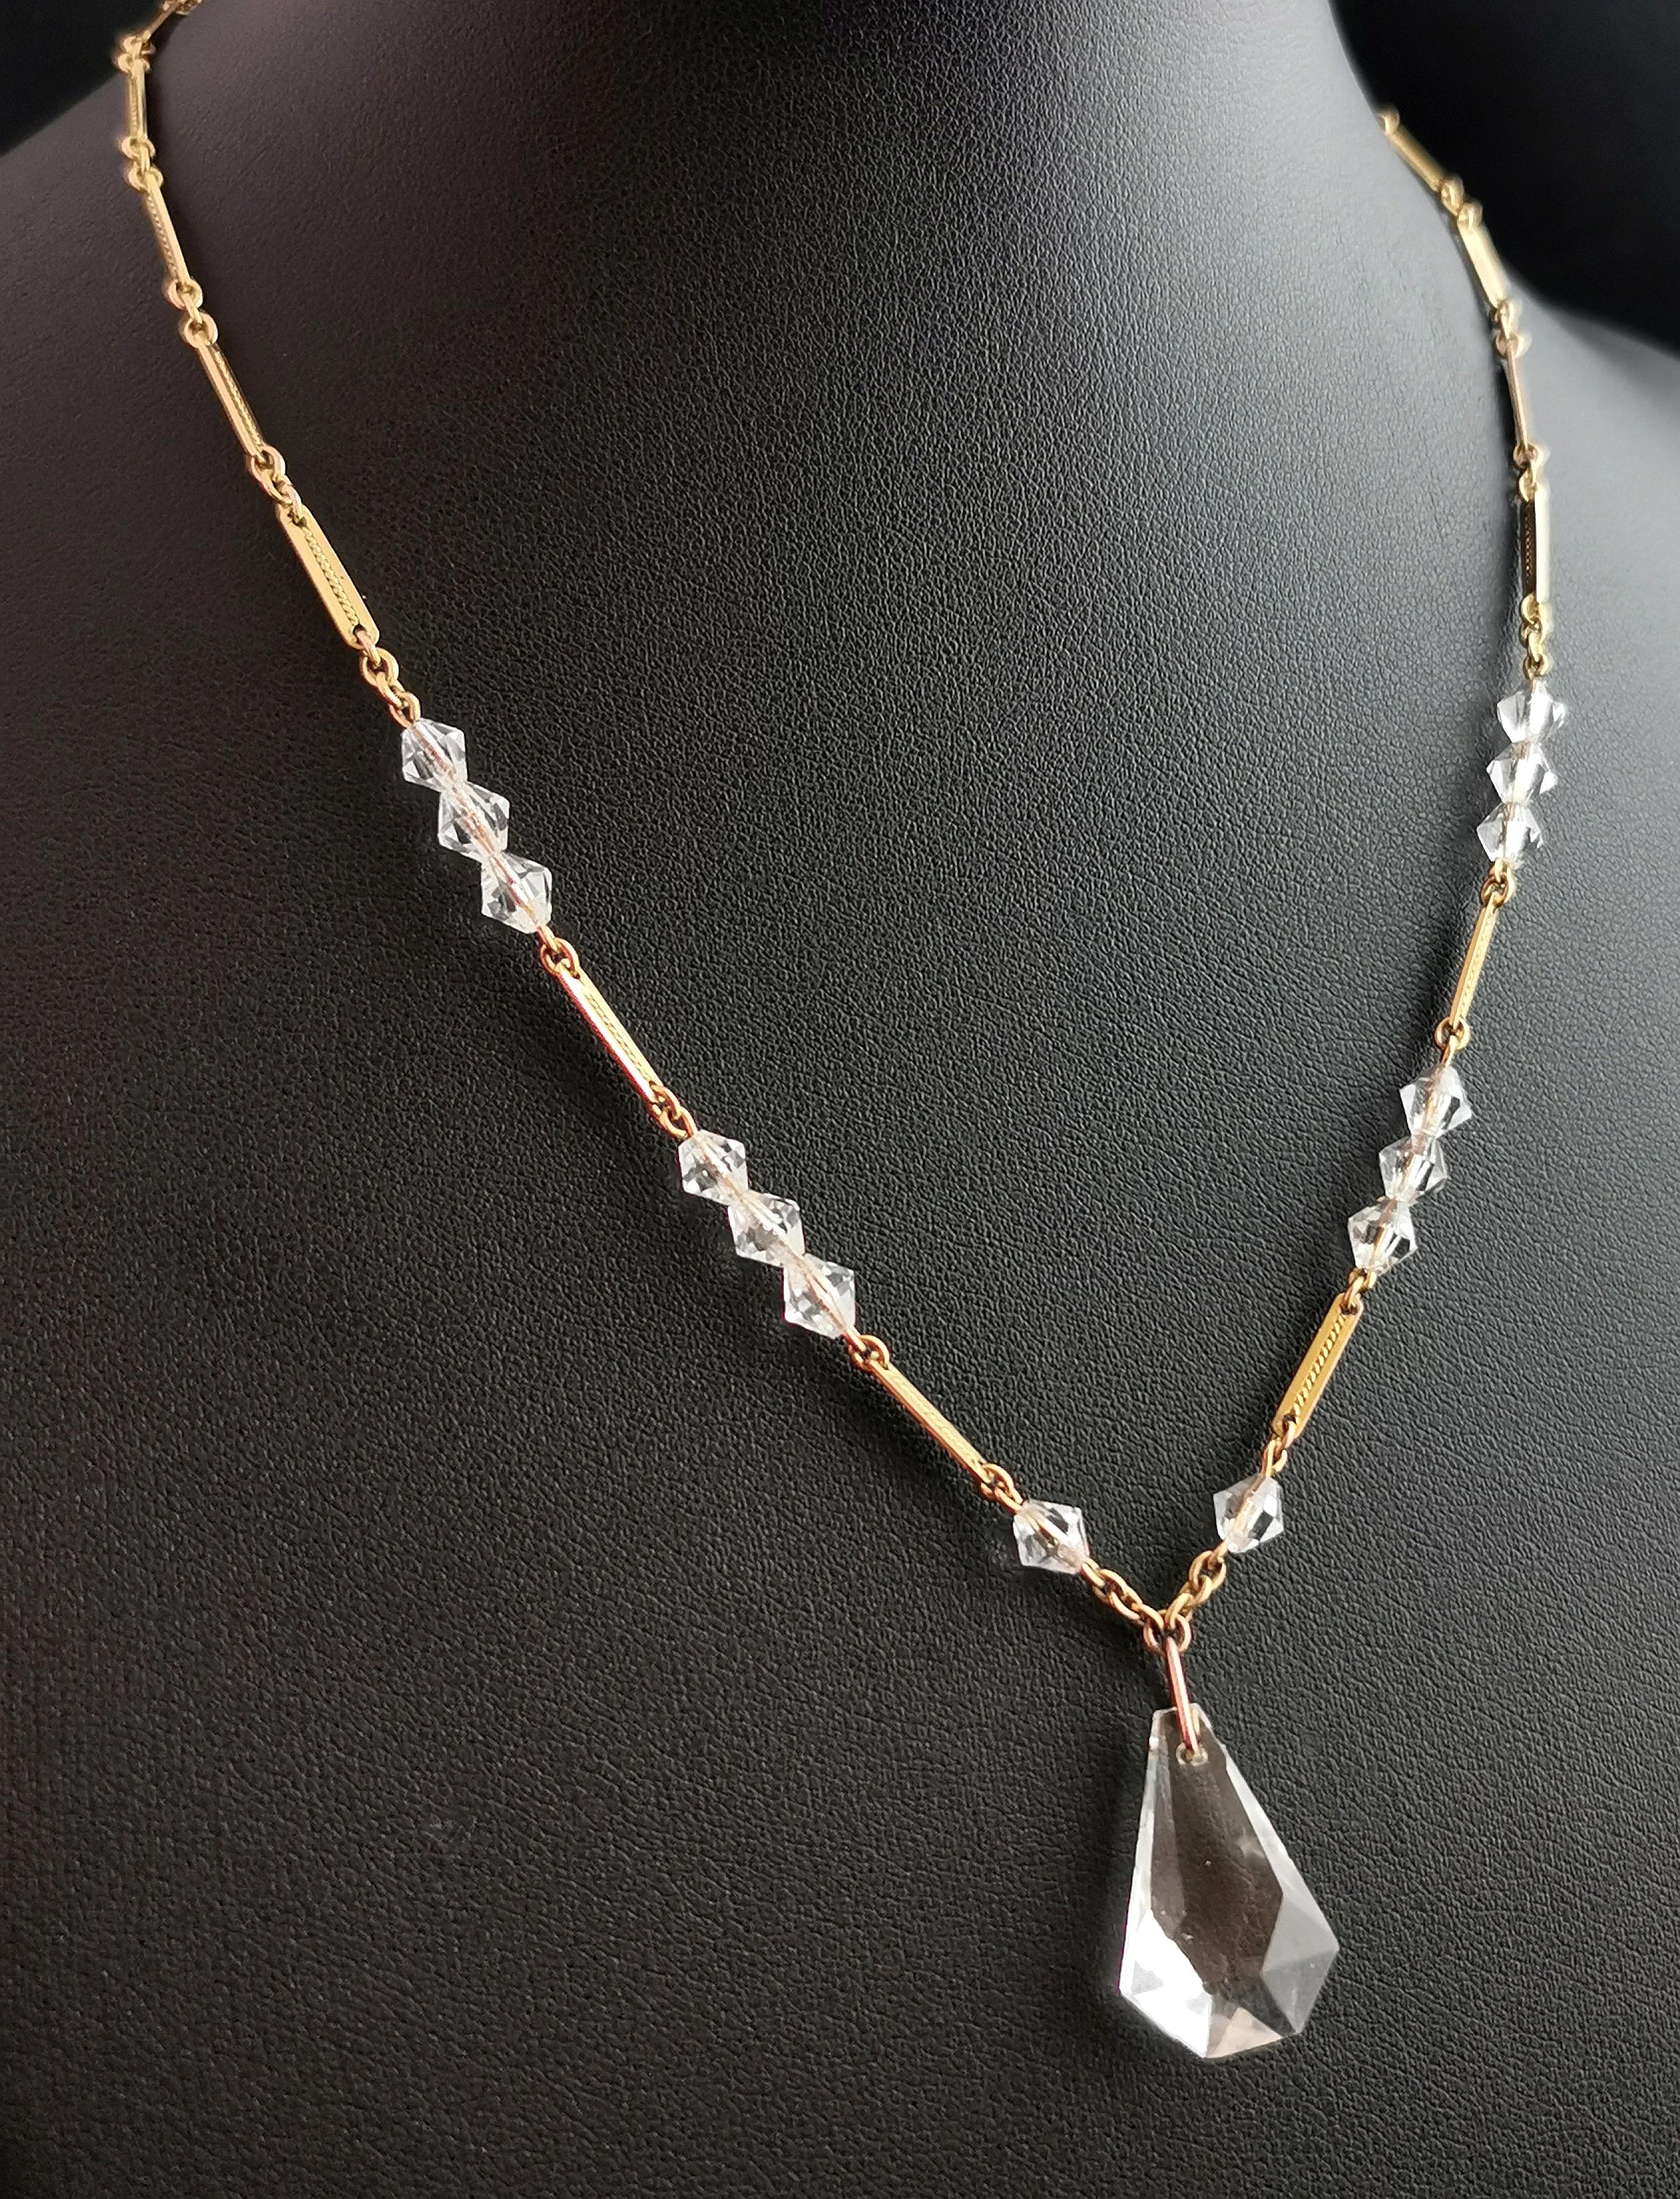 Women's Art Deco Rock Crystal Drop Pendant Necklace, 9 Karat Yellow Gold, Bar Link